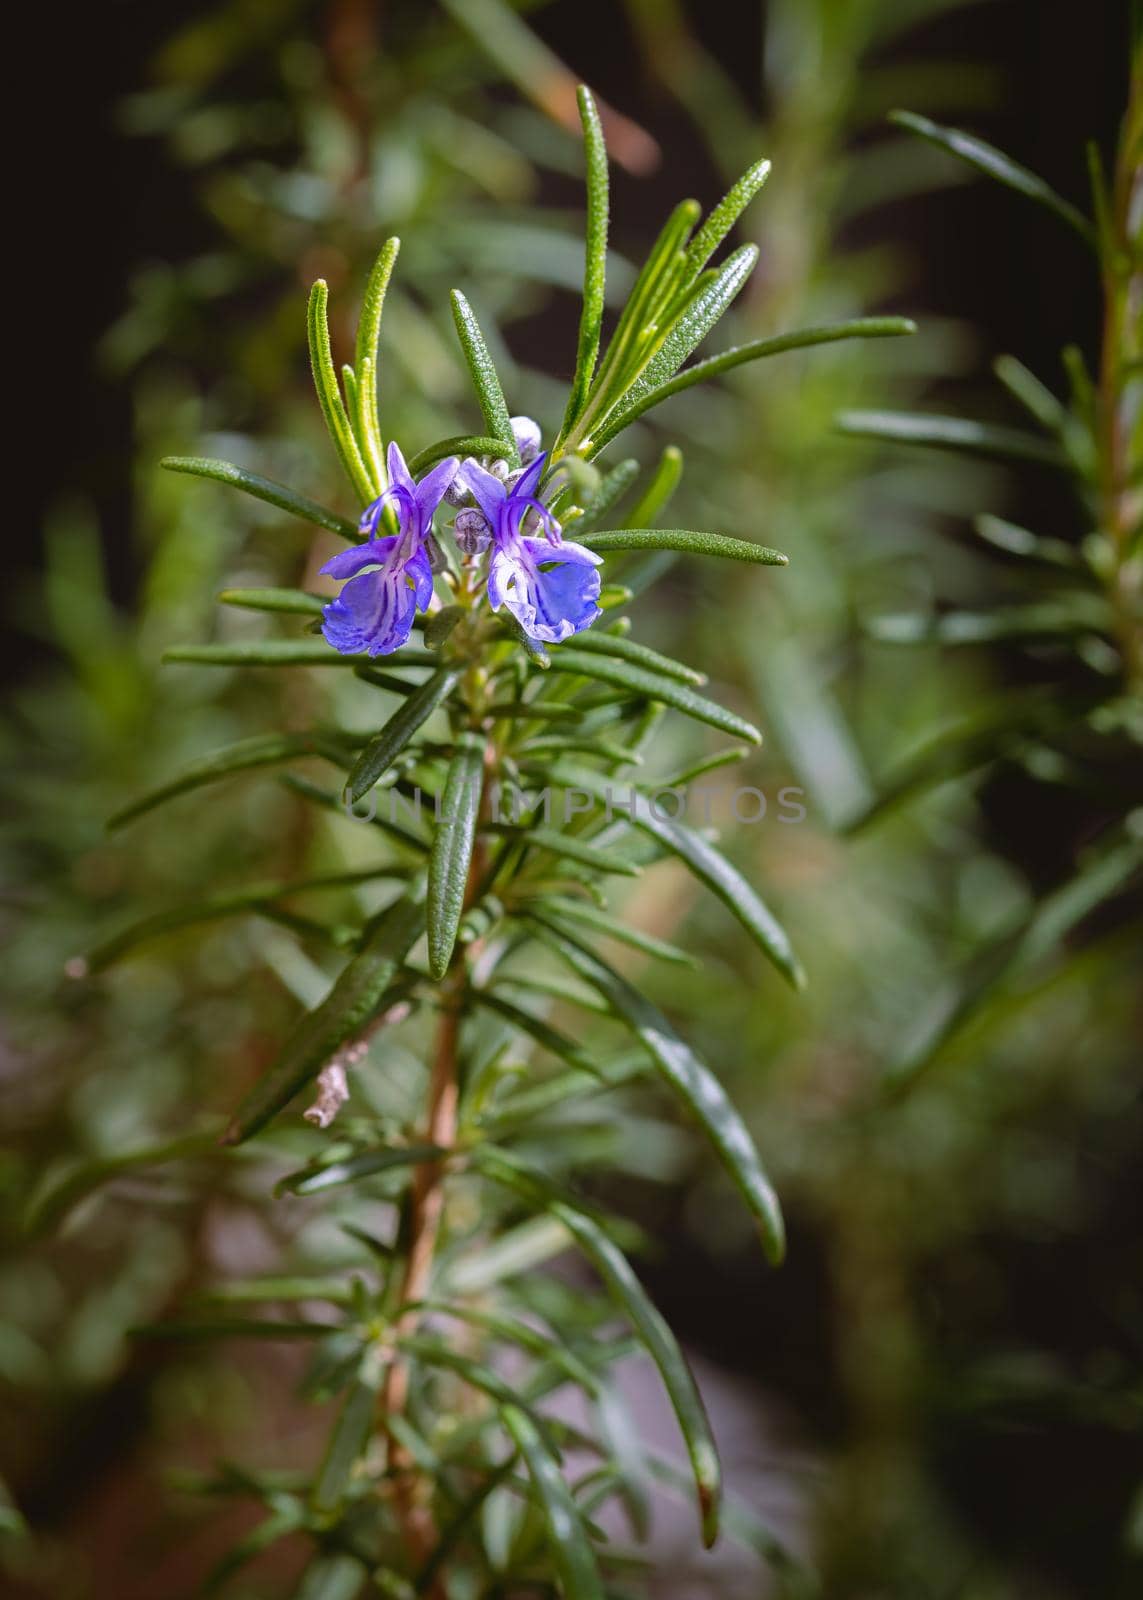 Closeup of a Rosemary Flower by MaxalTamor